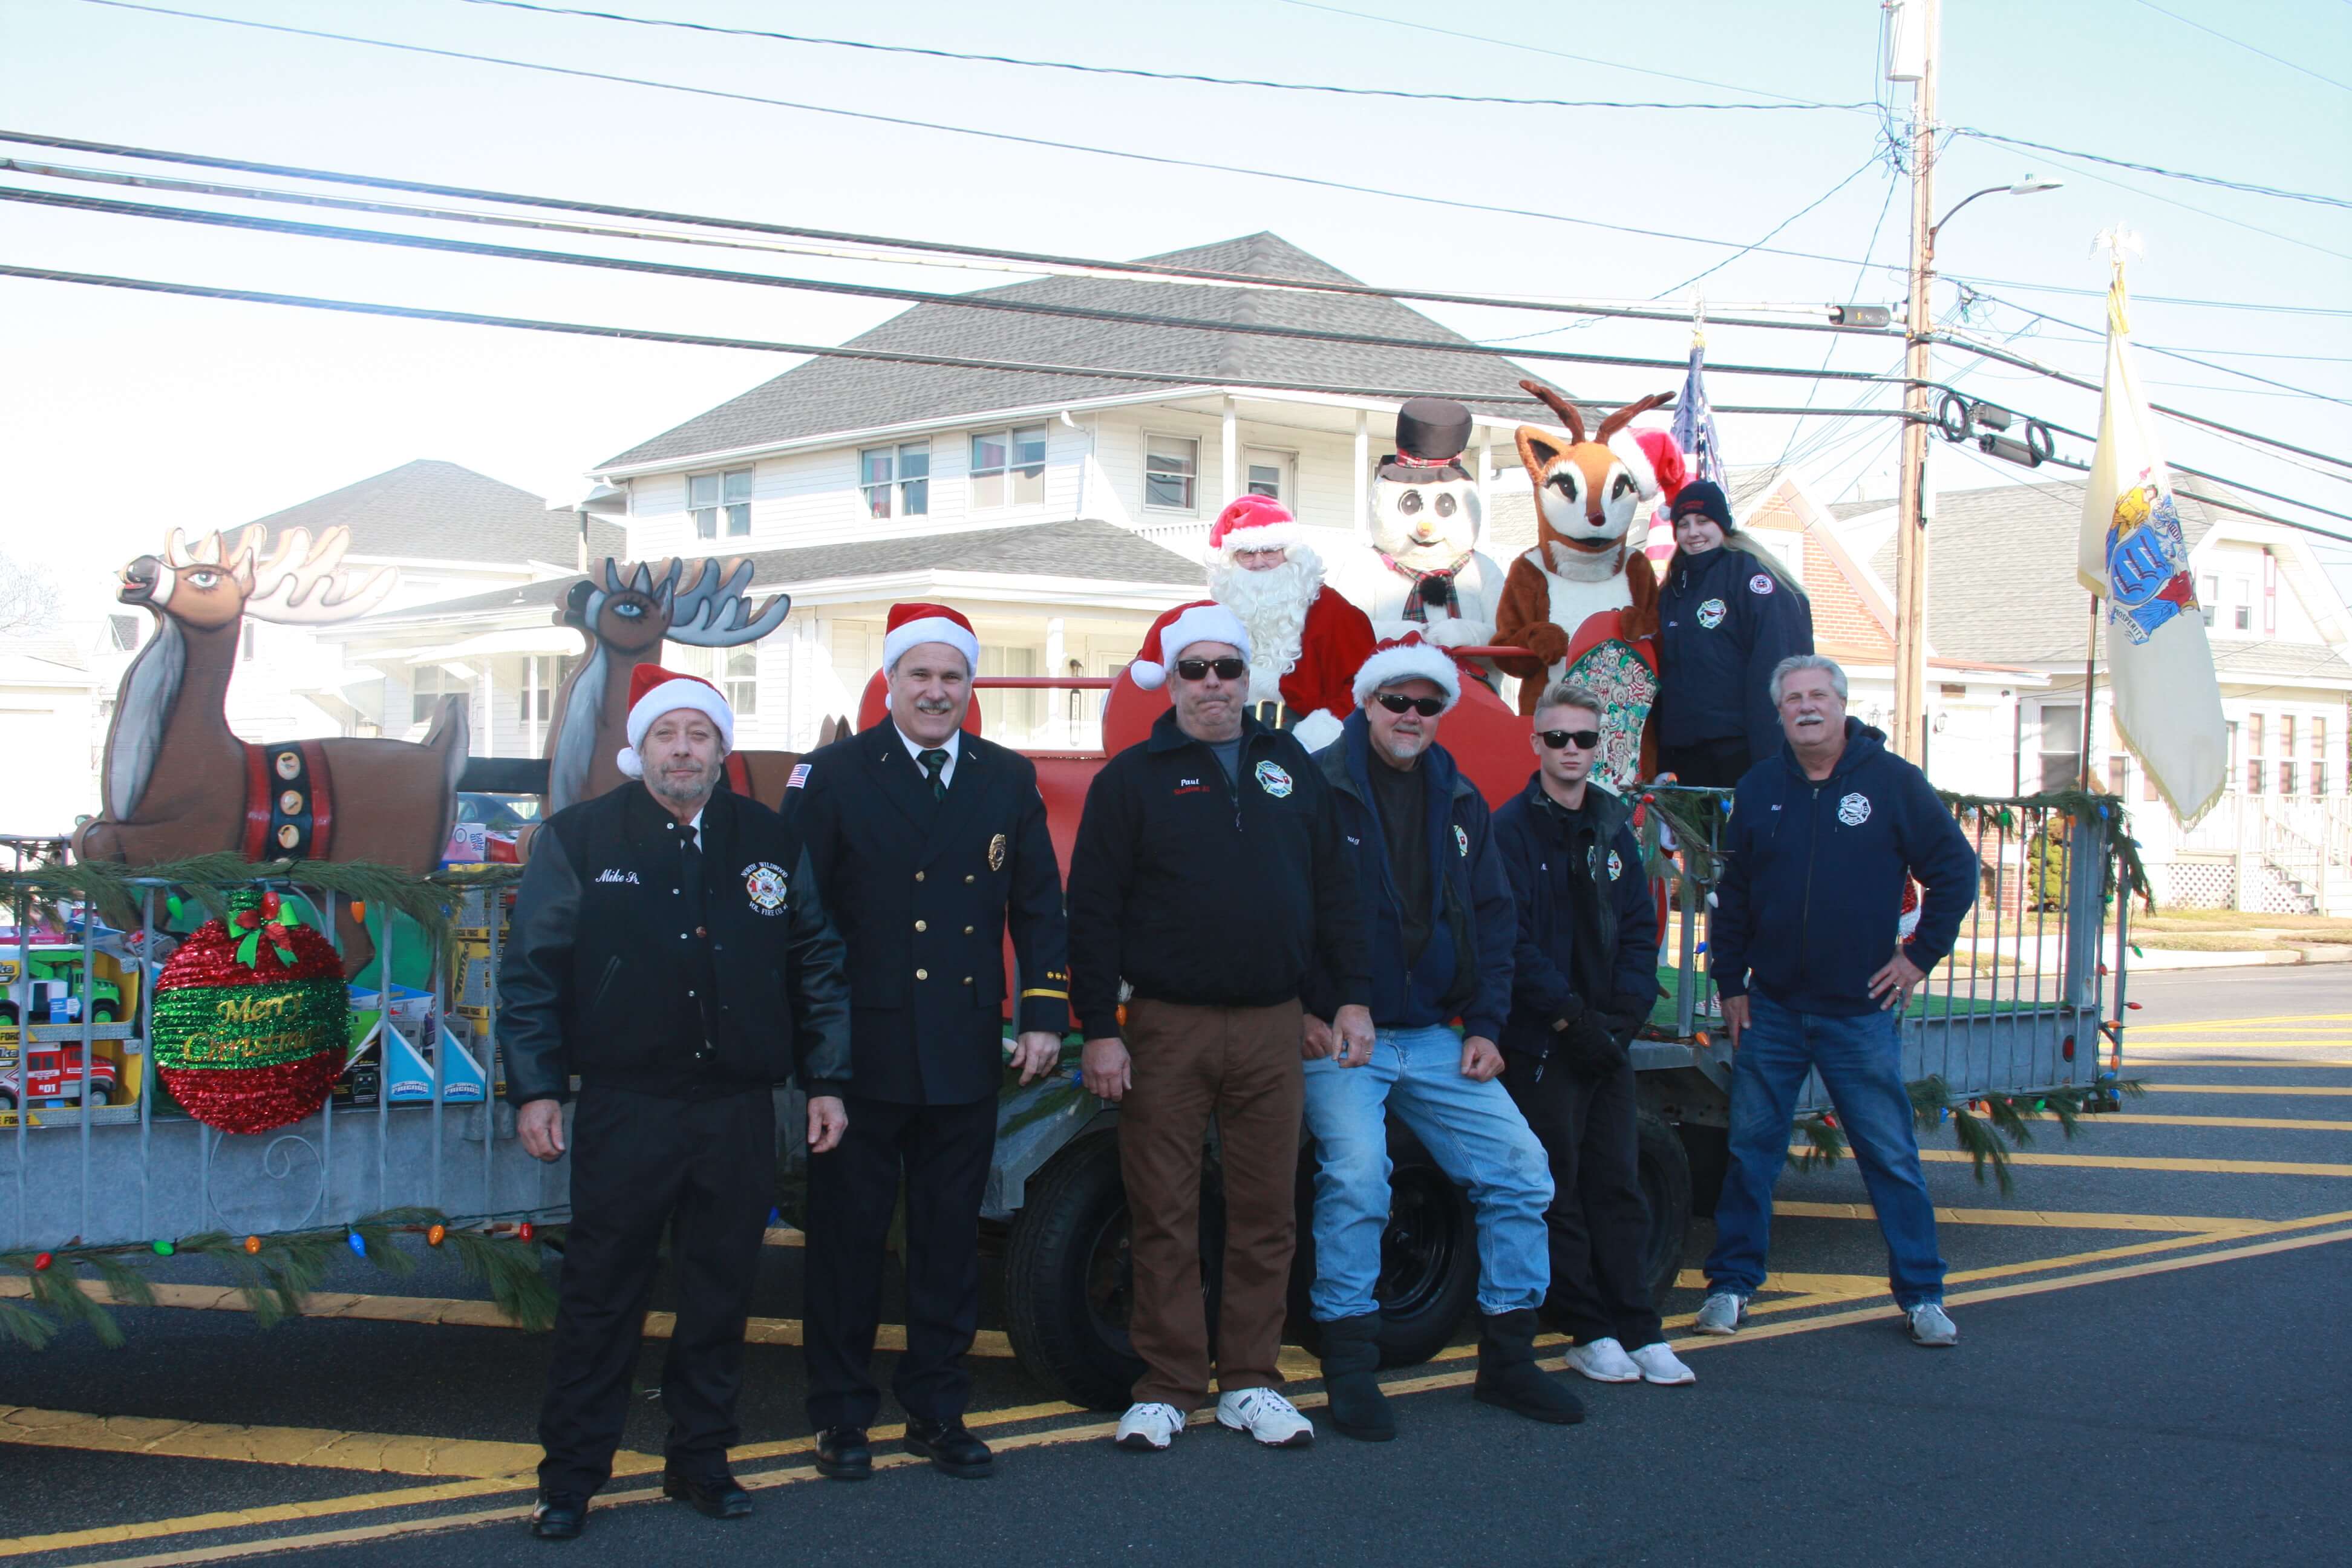 North Wildwood Volunteer Fire Co. No. 1 members who helped Santa deliver presents to children.